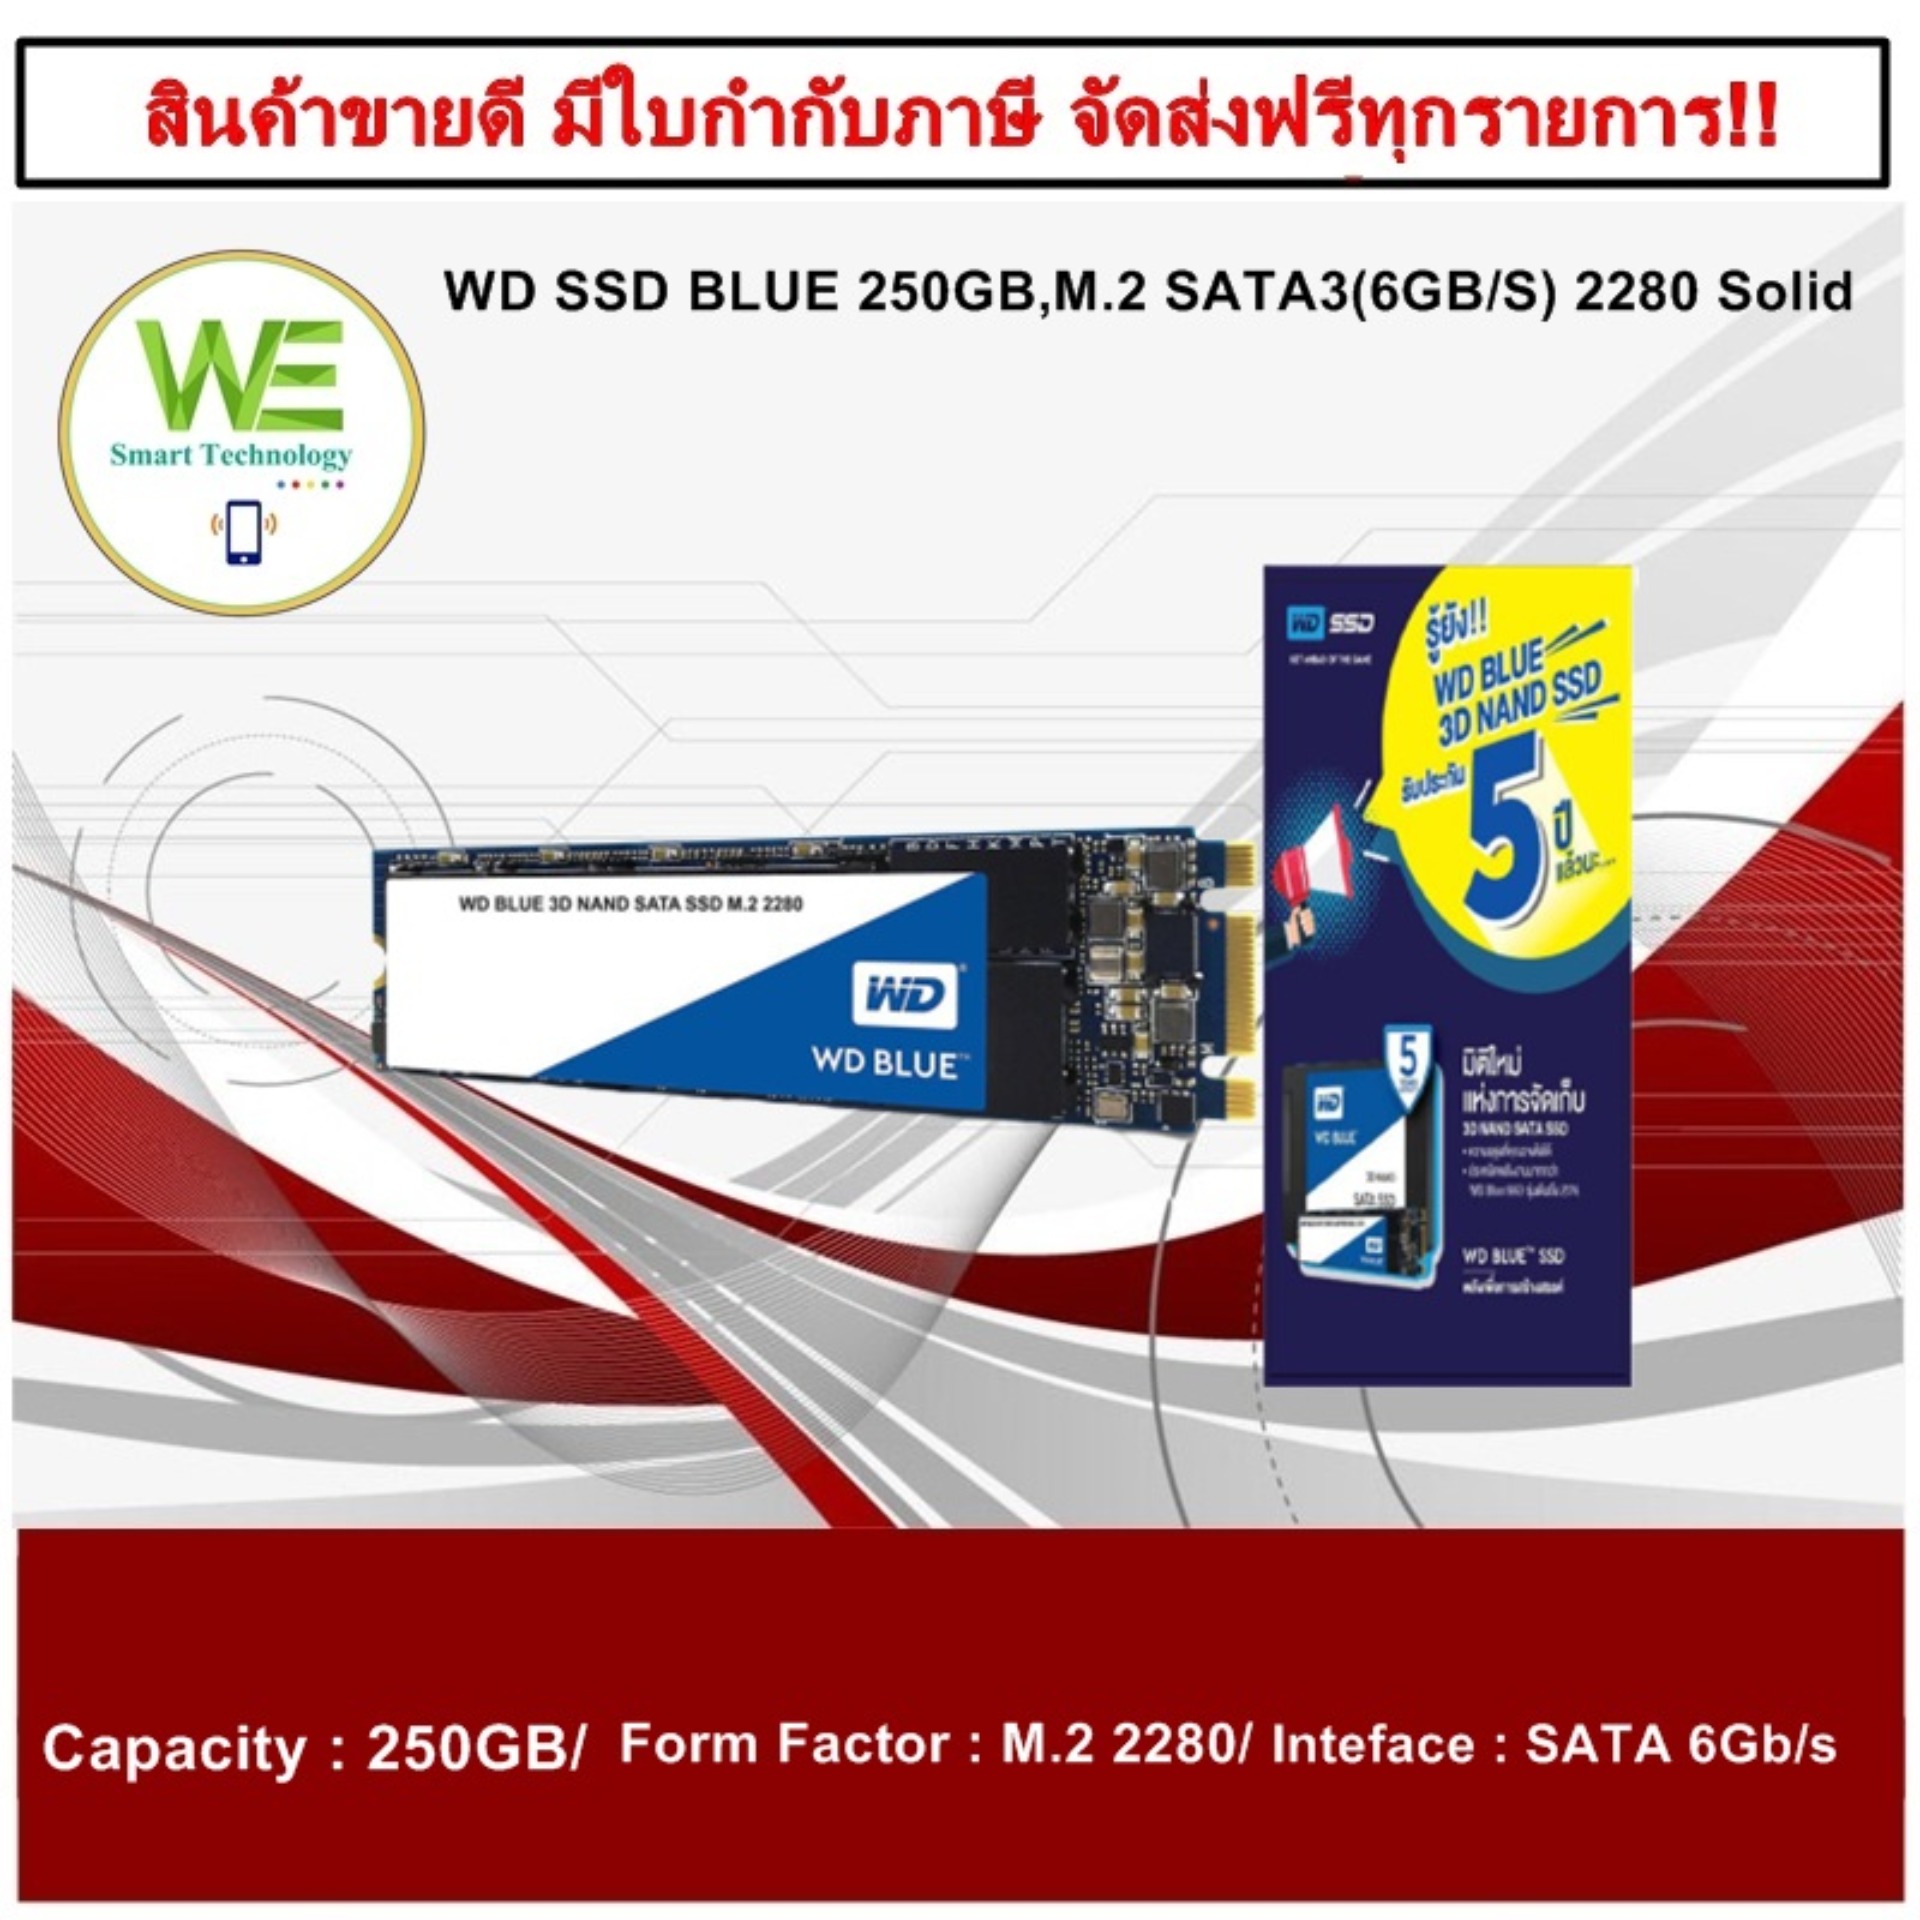 WD SSD BLUE 250GB,M.2 SATA3(6GB/S) 2280 Solid State Drive - R 560MB/S,W 525MB/S,**WDS250G2B0B**3D 5 YEAR (BY SYNNEX)